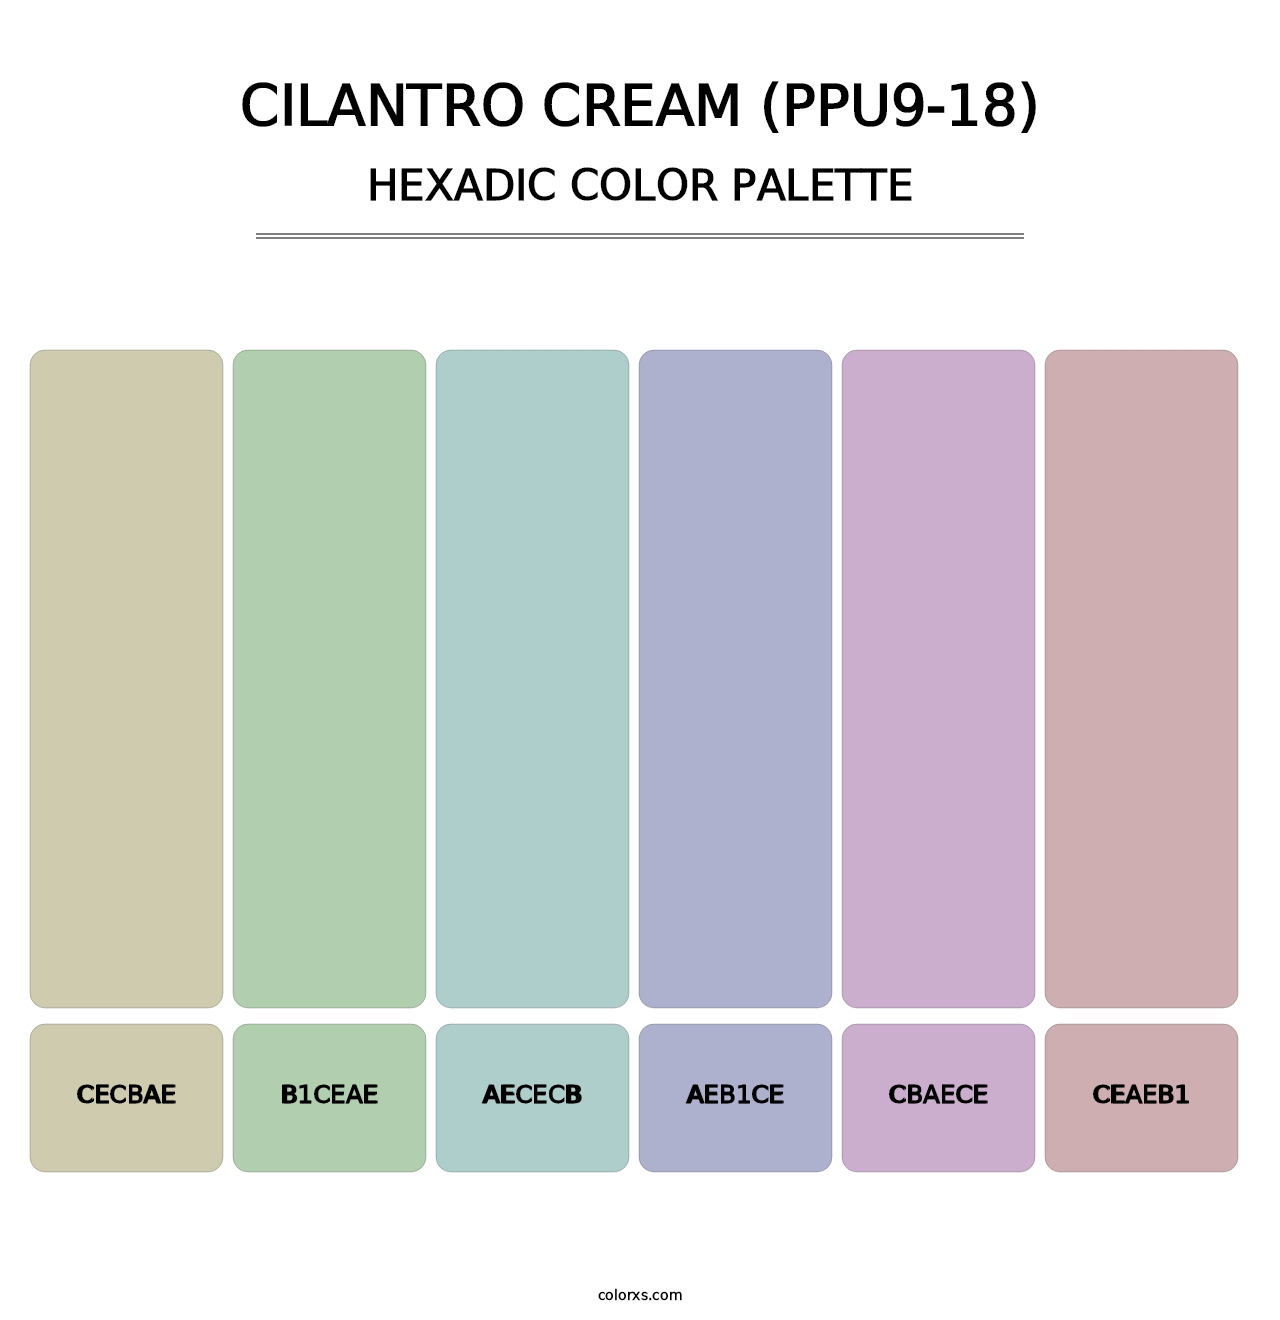 Cilantro Cream (PPU9-18) - Hexadic Color Palette